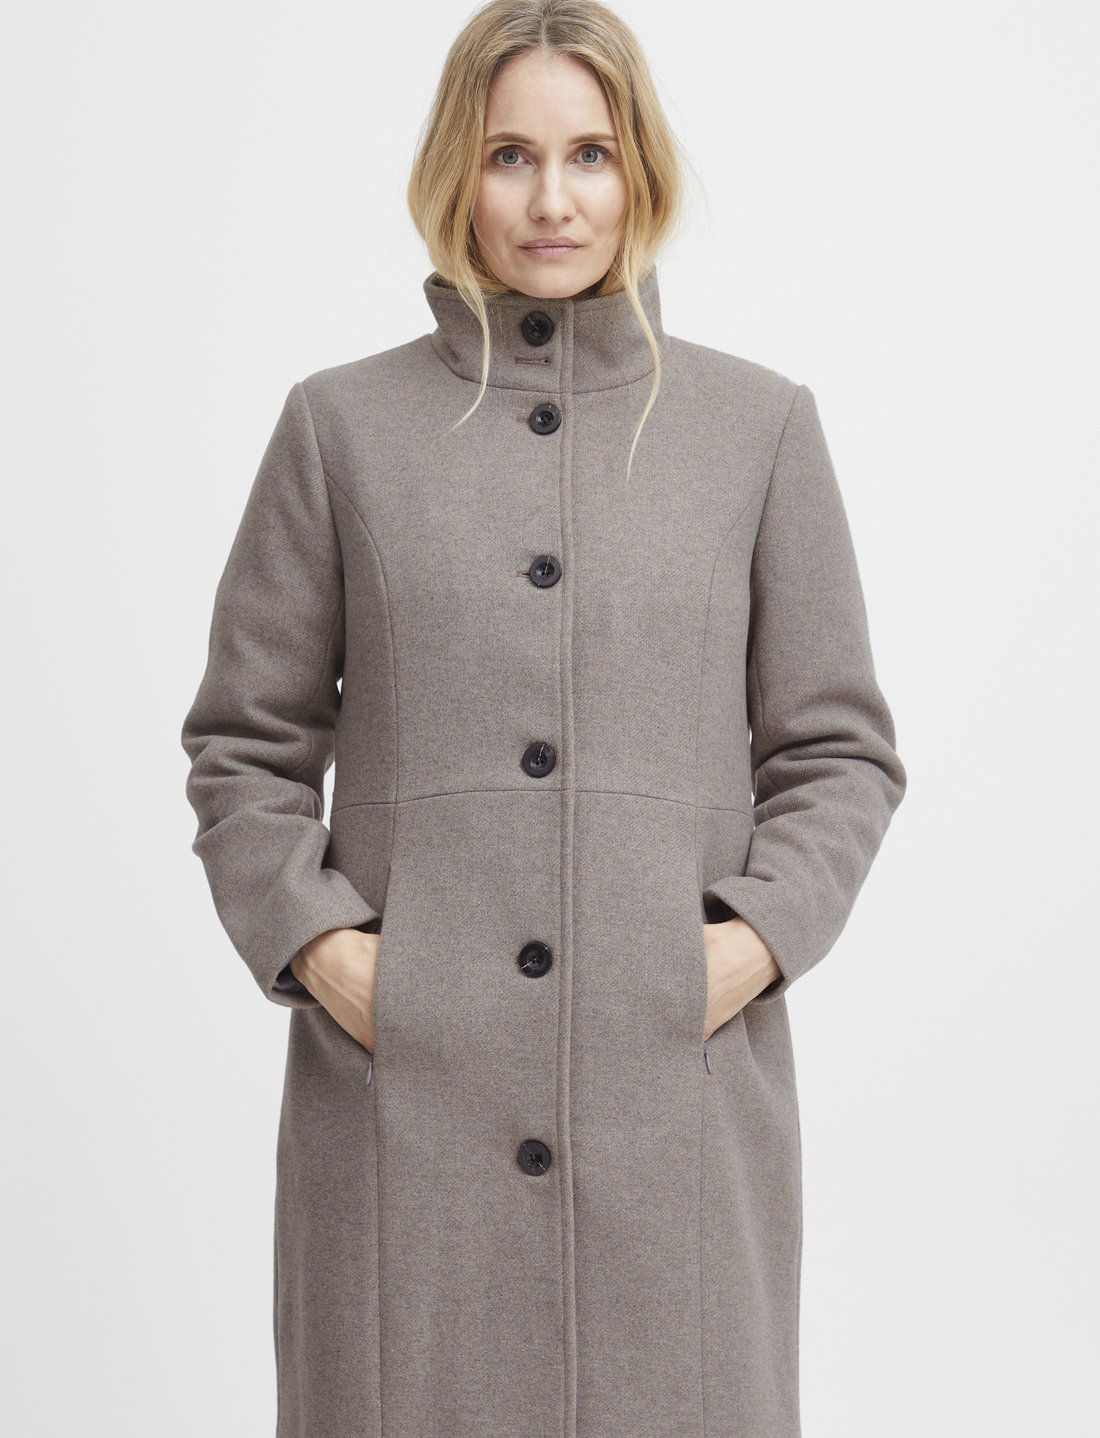 Fransa Frpenelope Ja 1 – jackets & coats – shop at Booztlet